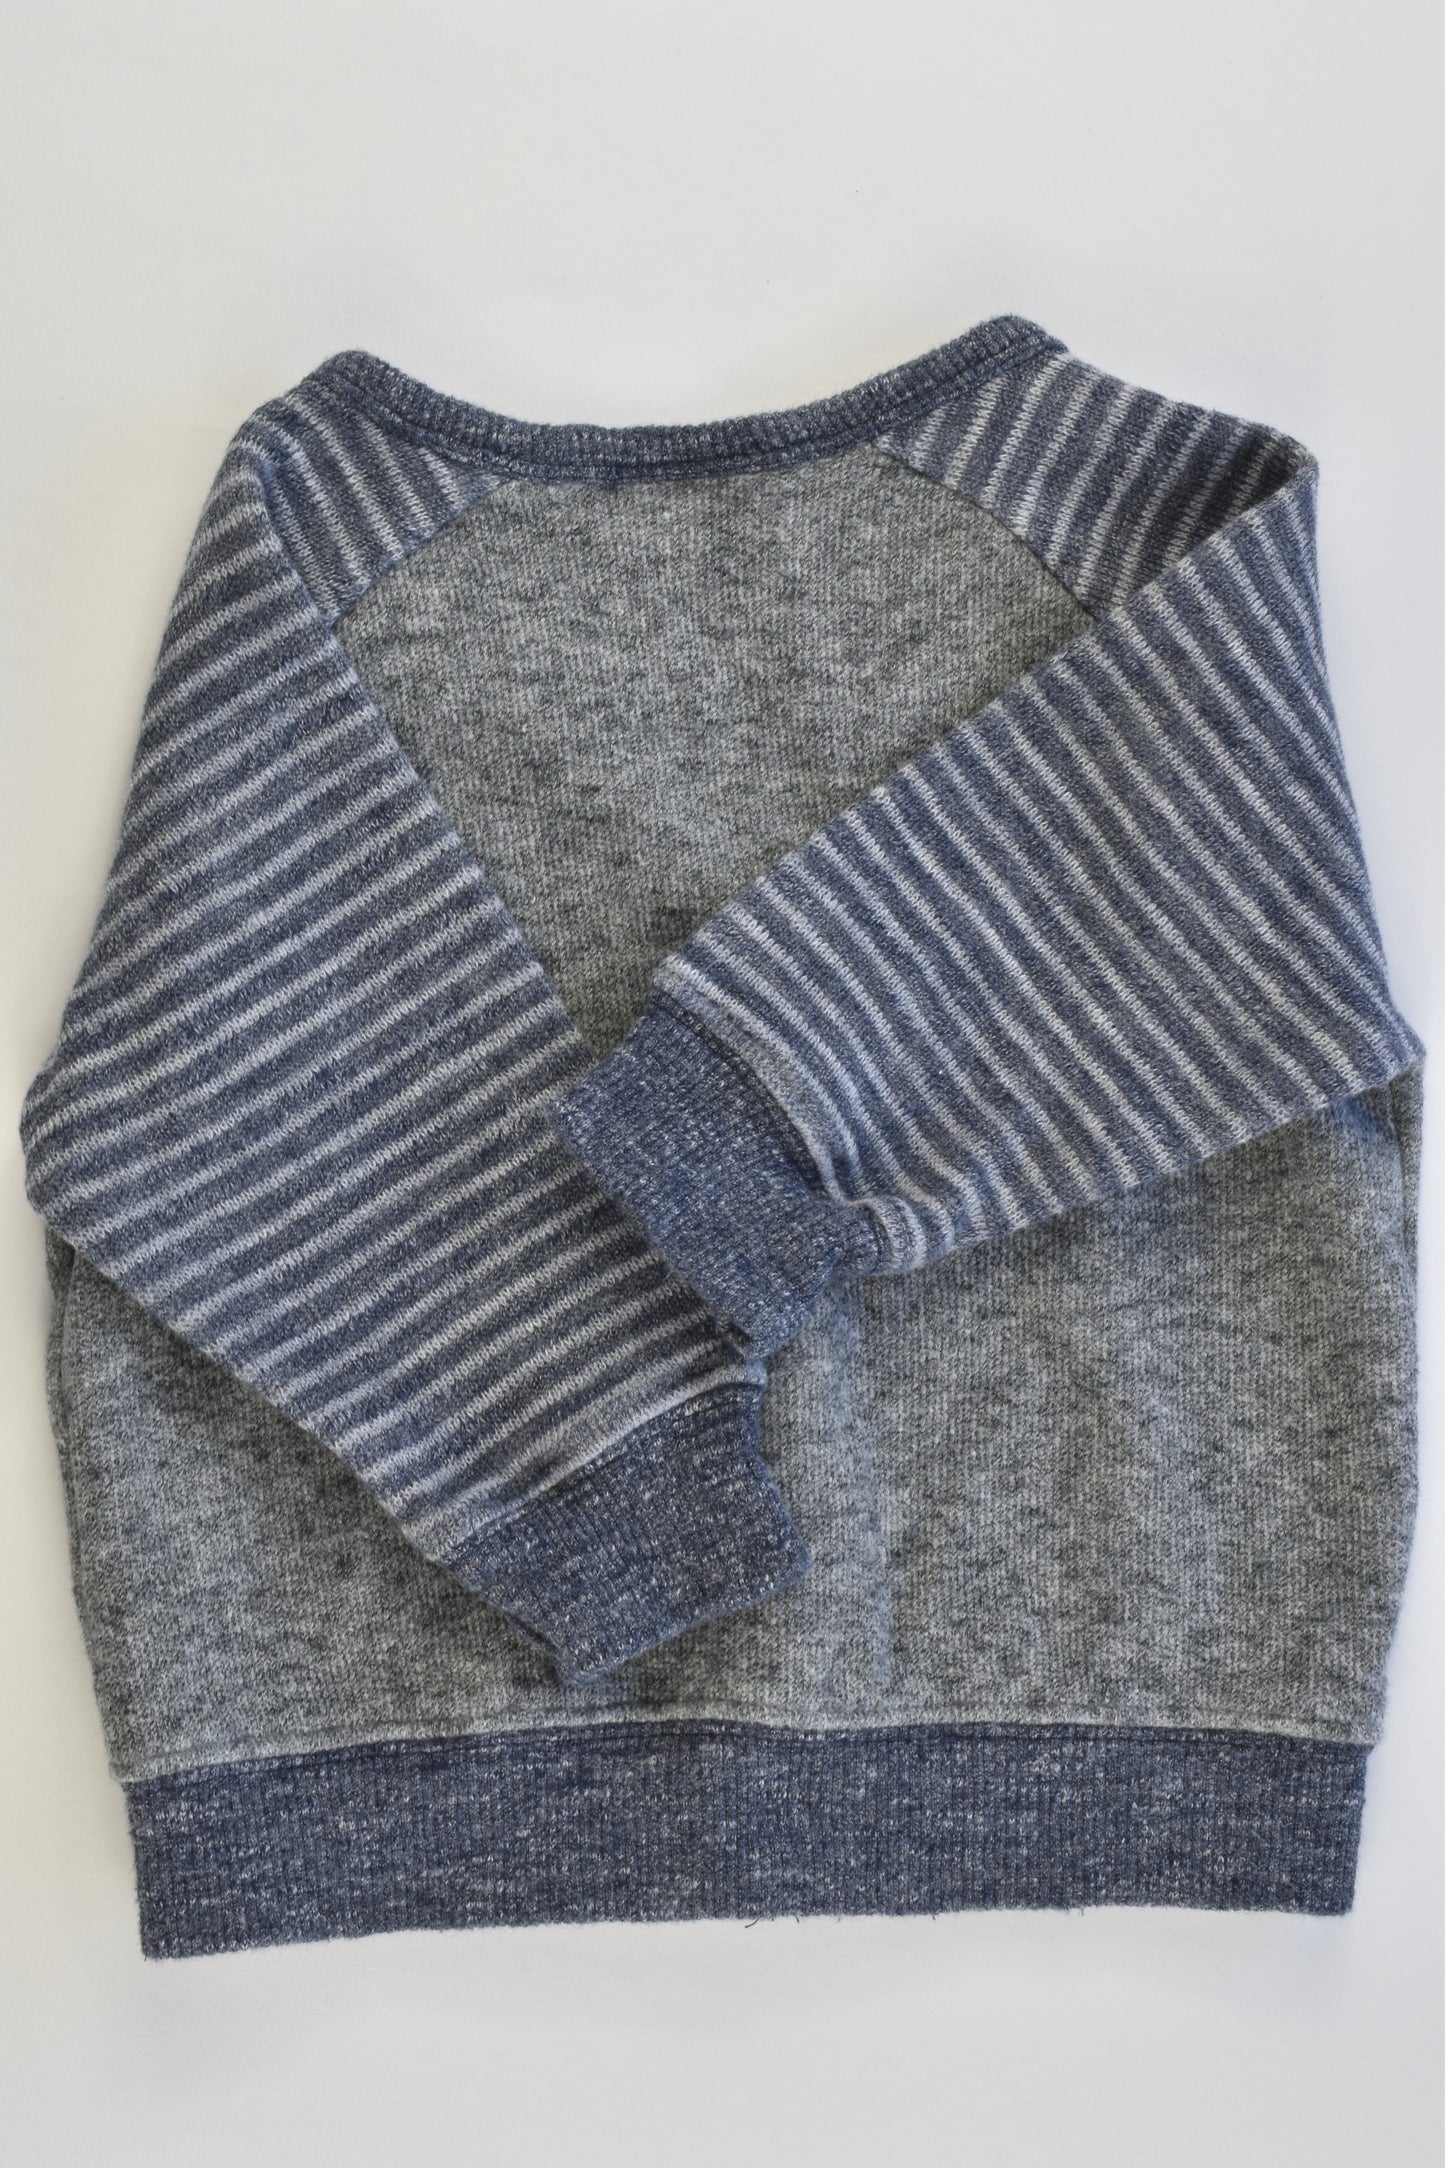 Next (UK) Size 0 (80 cm, 9-12 months) Grandpa Sweater Cardigan